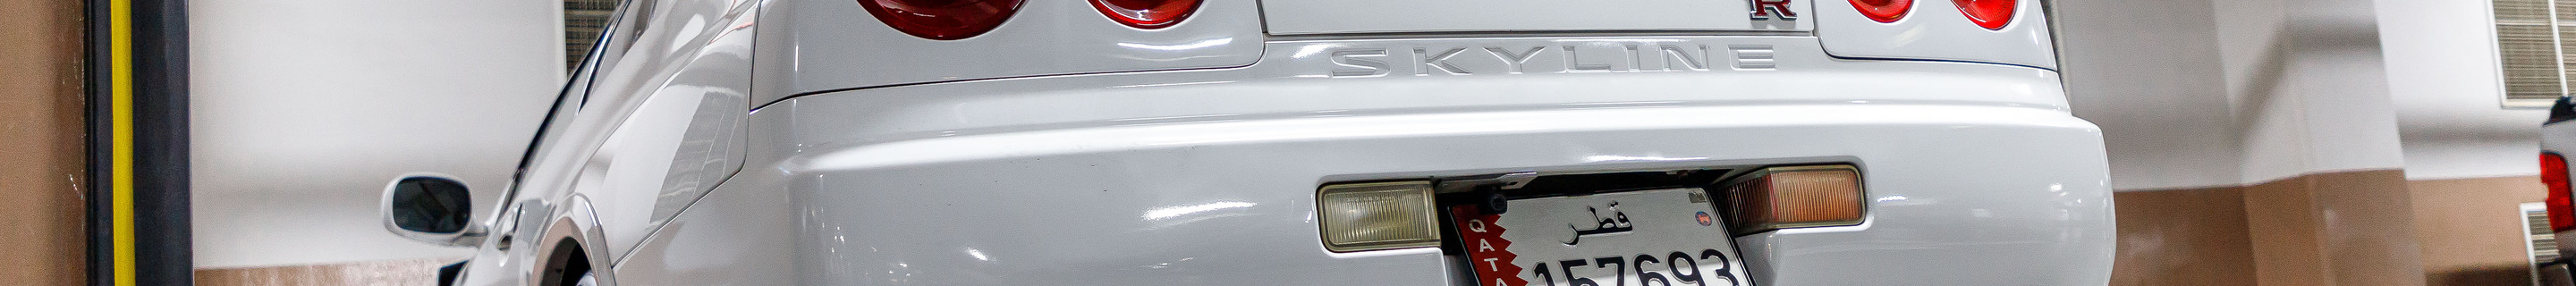 Nissan Skyline R34 GT-R NISMO Z-tune